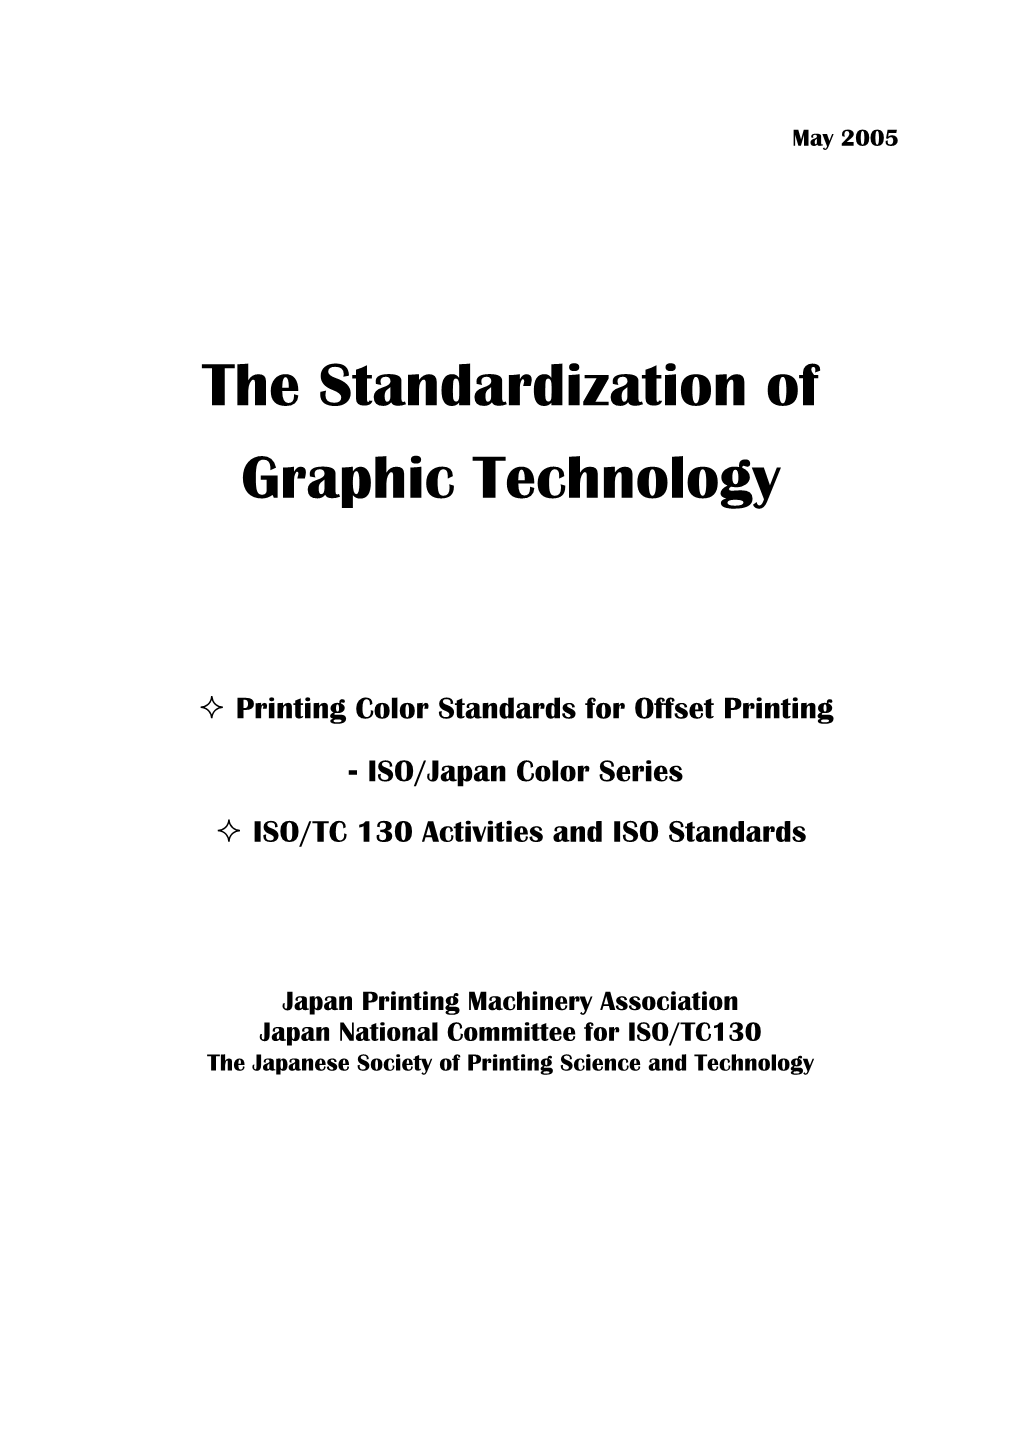 Standardization of Printing